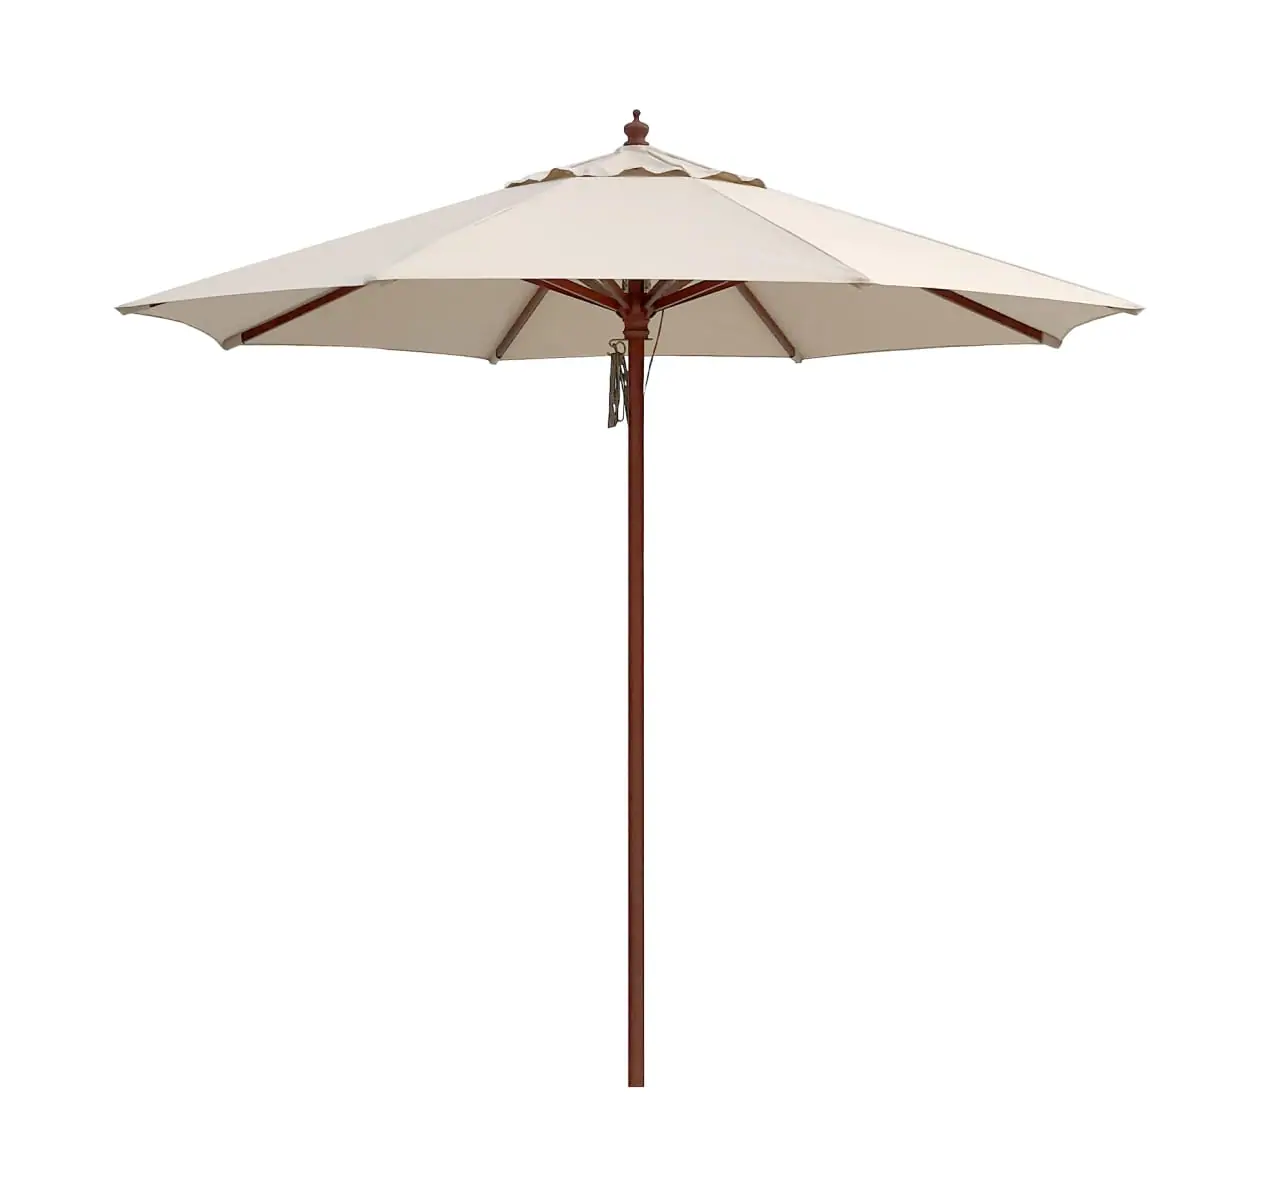 conva-madera-parasol02